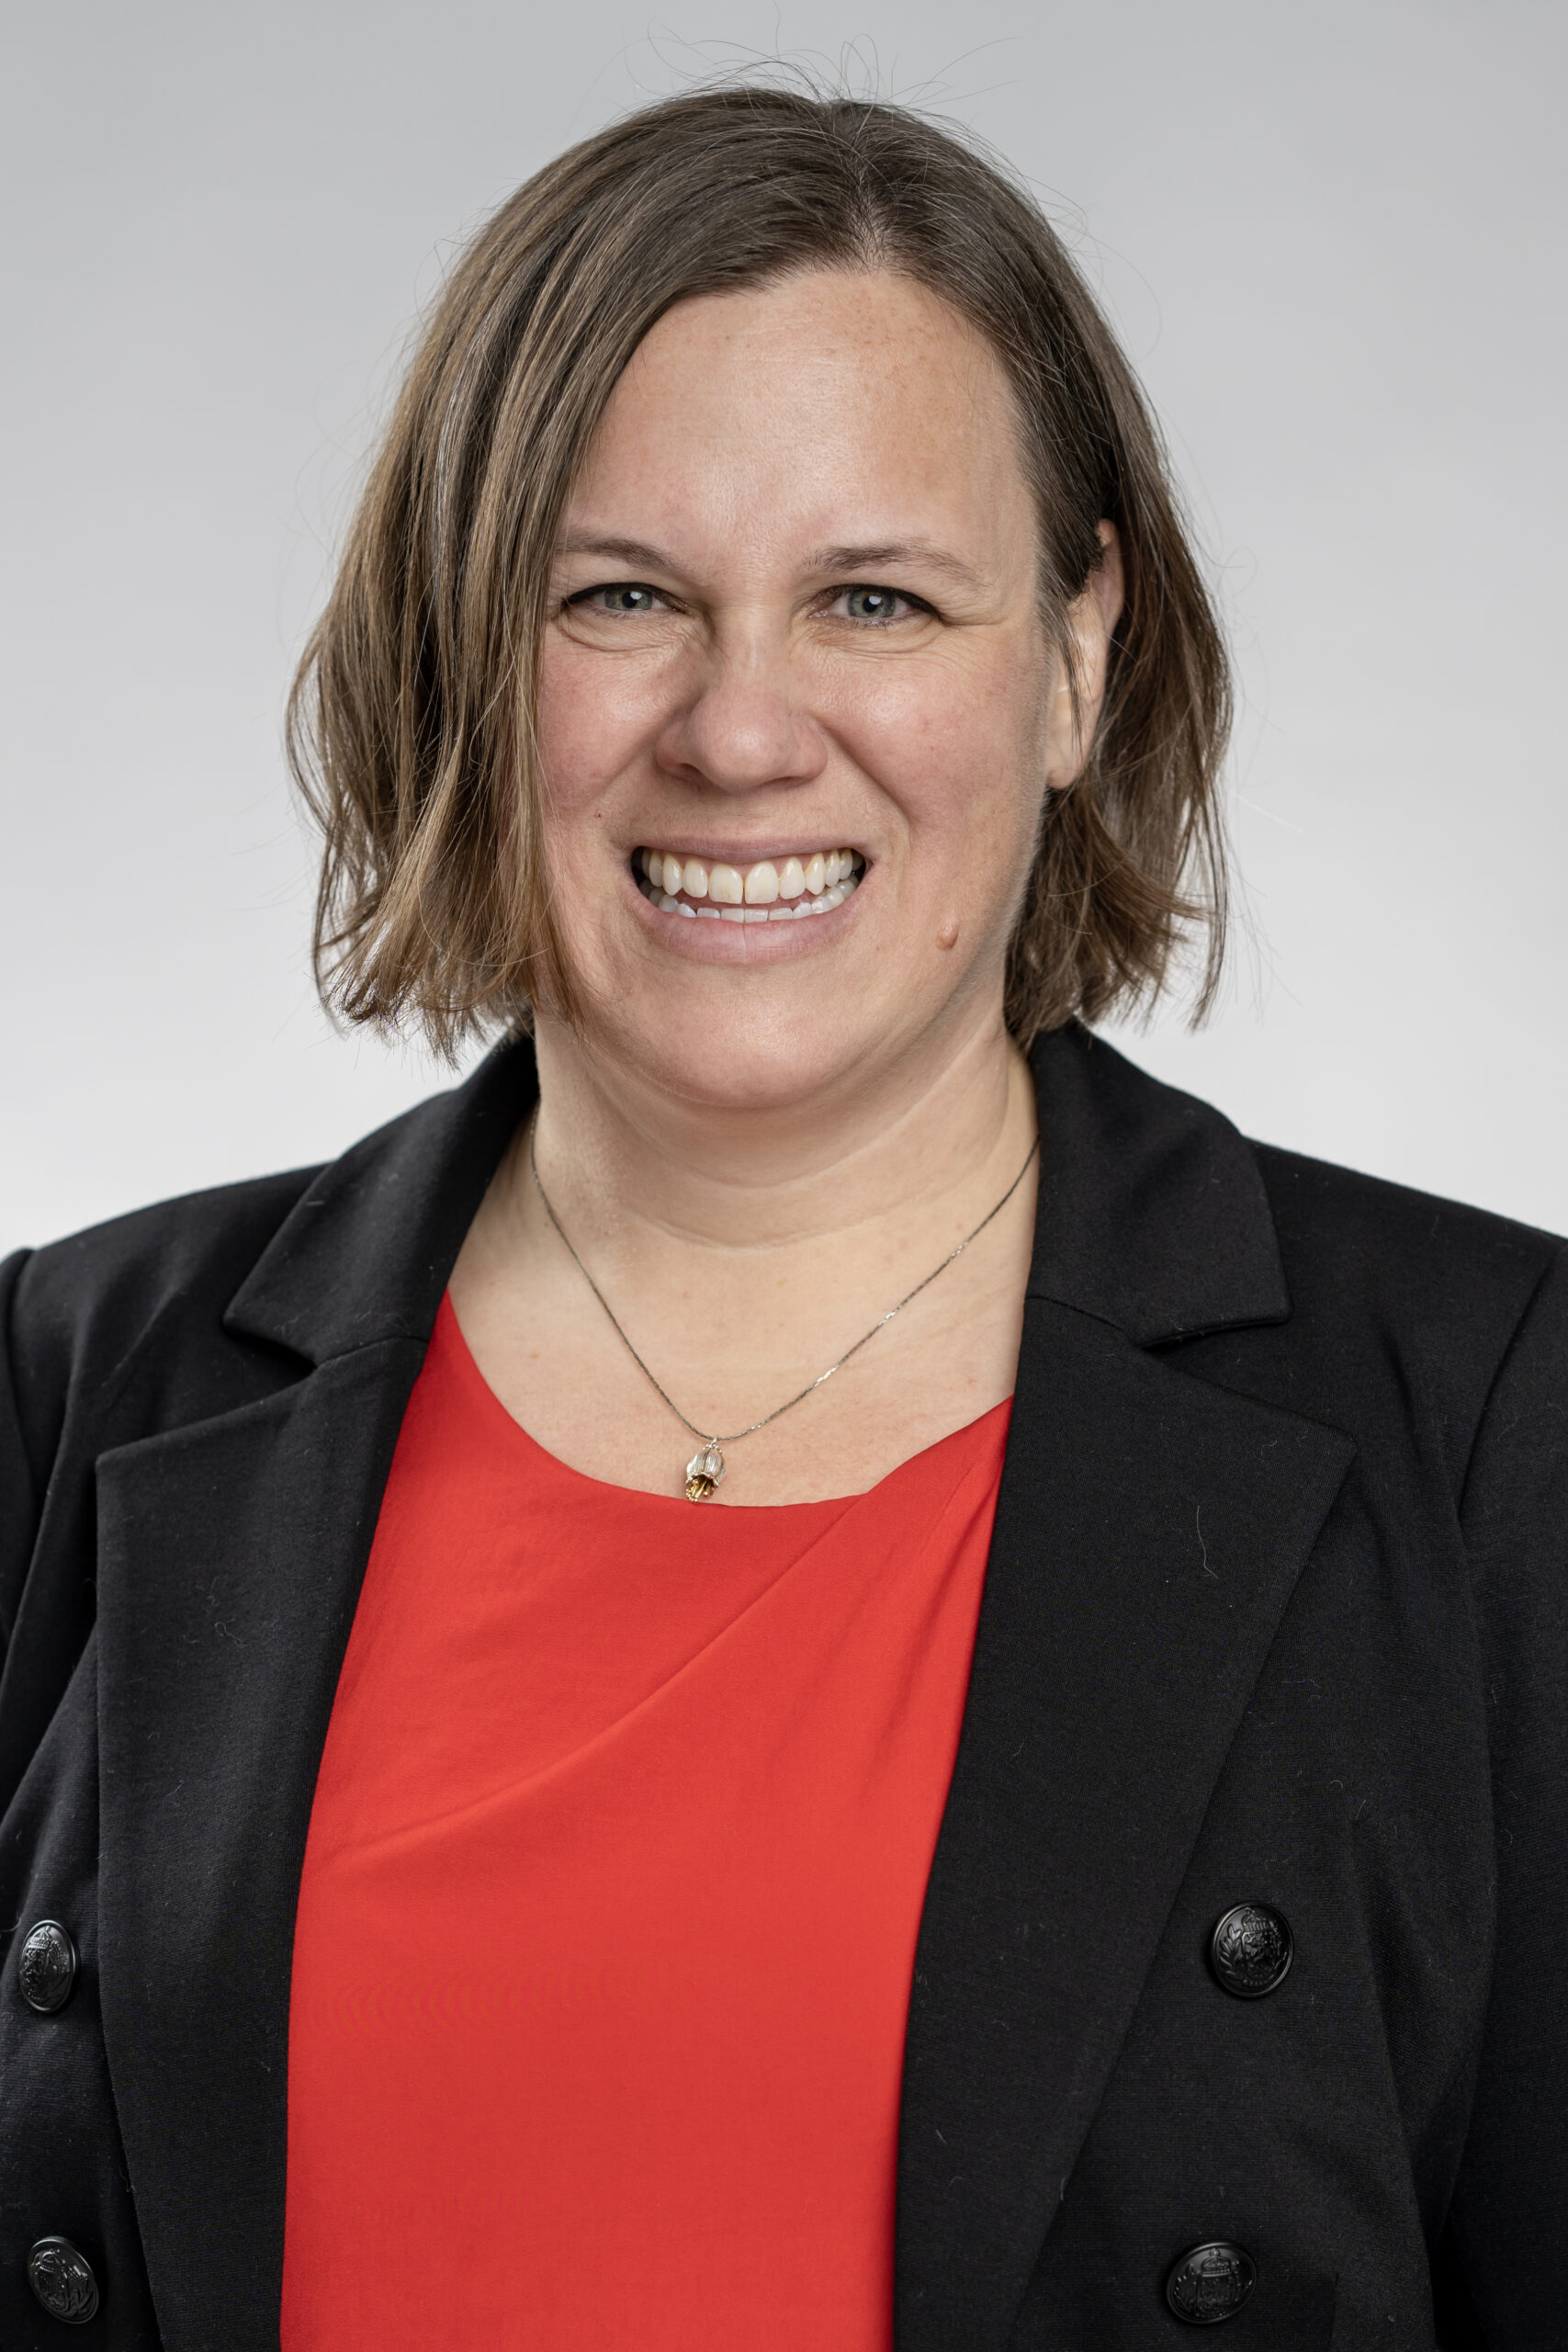 Laura King, Vice Chancellor for Strategic Enrollment at UW-River Falls